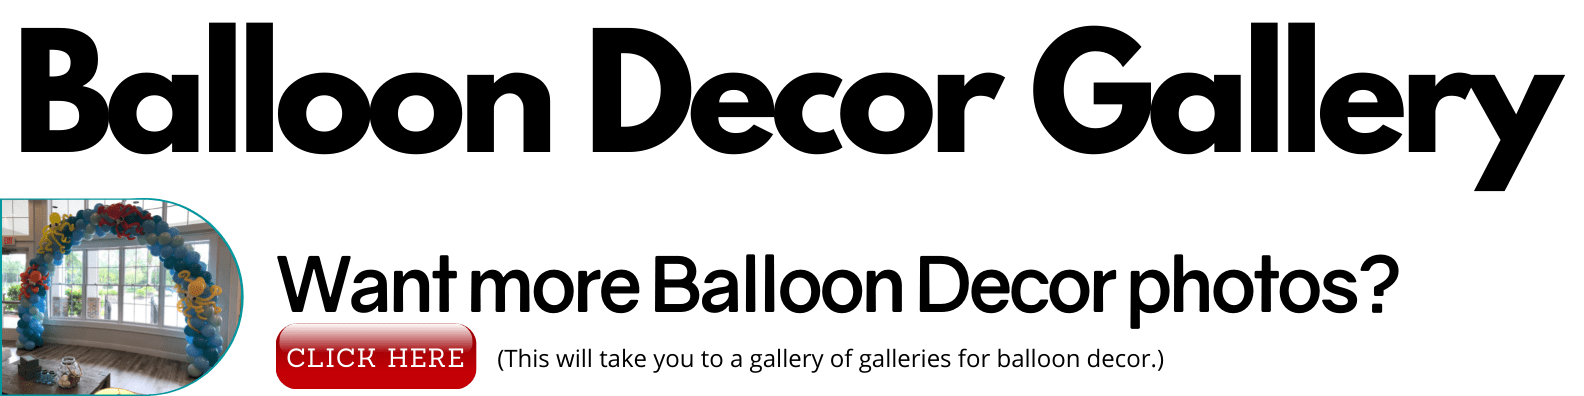 Balloon Decor Gallery Call to action with balloon arch